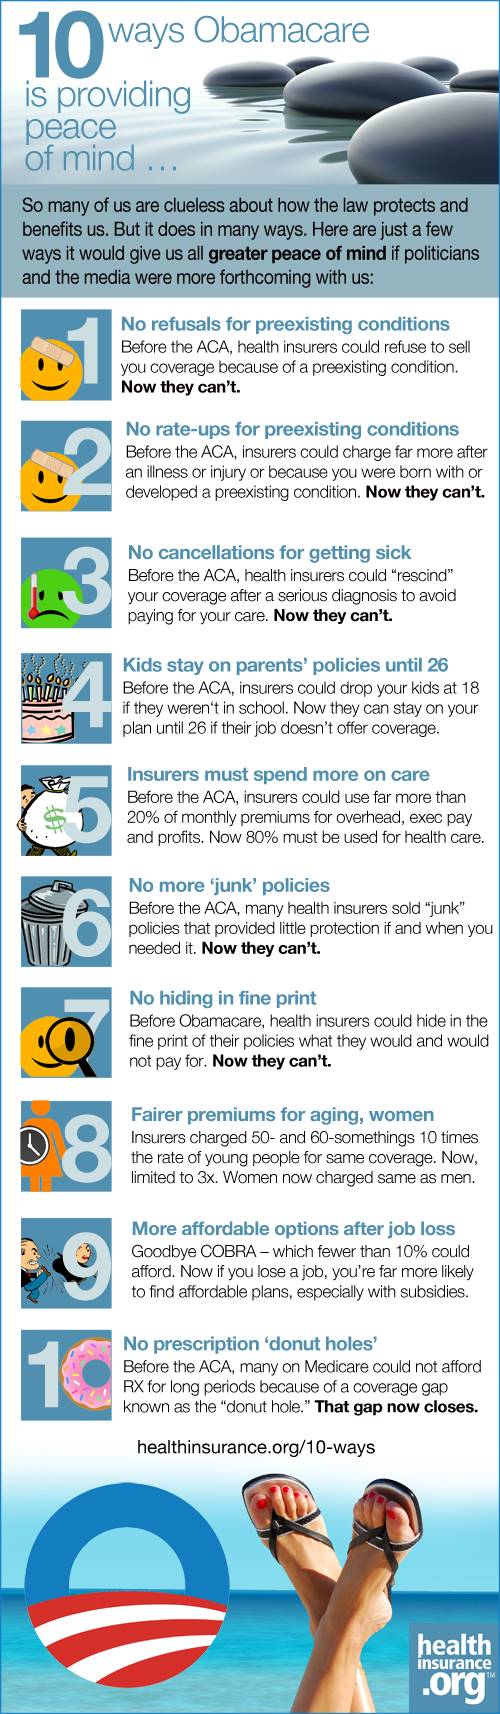 10 ways Obamacare is providing peace of mind